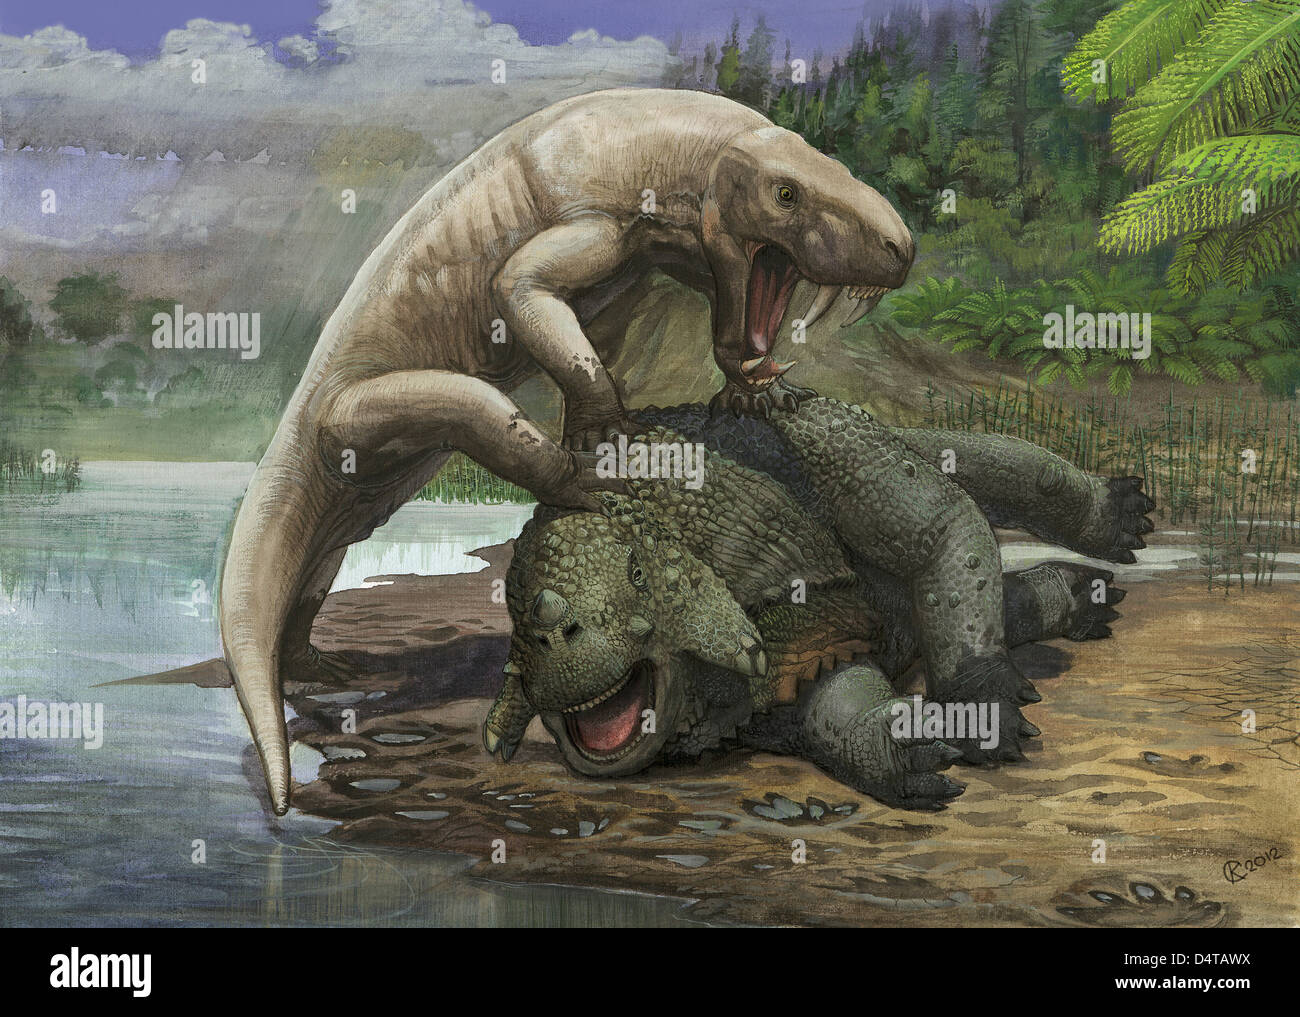 An Inostrancevia alexandri attacks a Scutosaurus karpinski in prehistoric times. Stock Photo